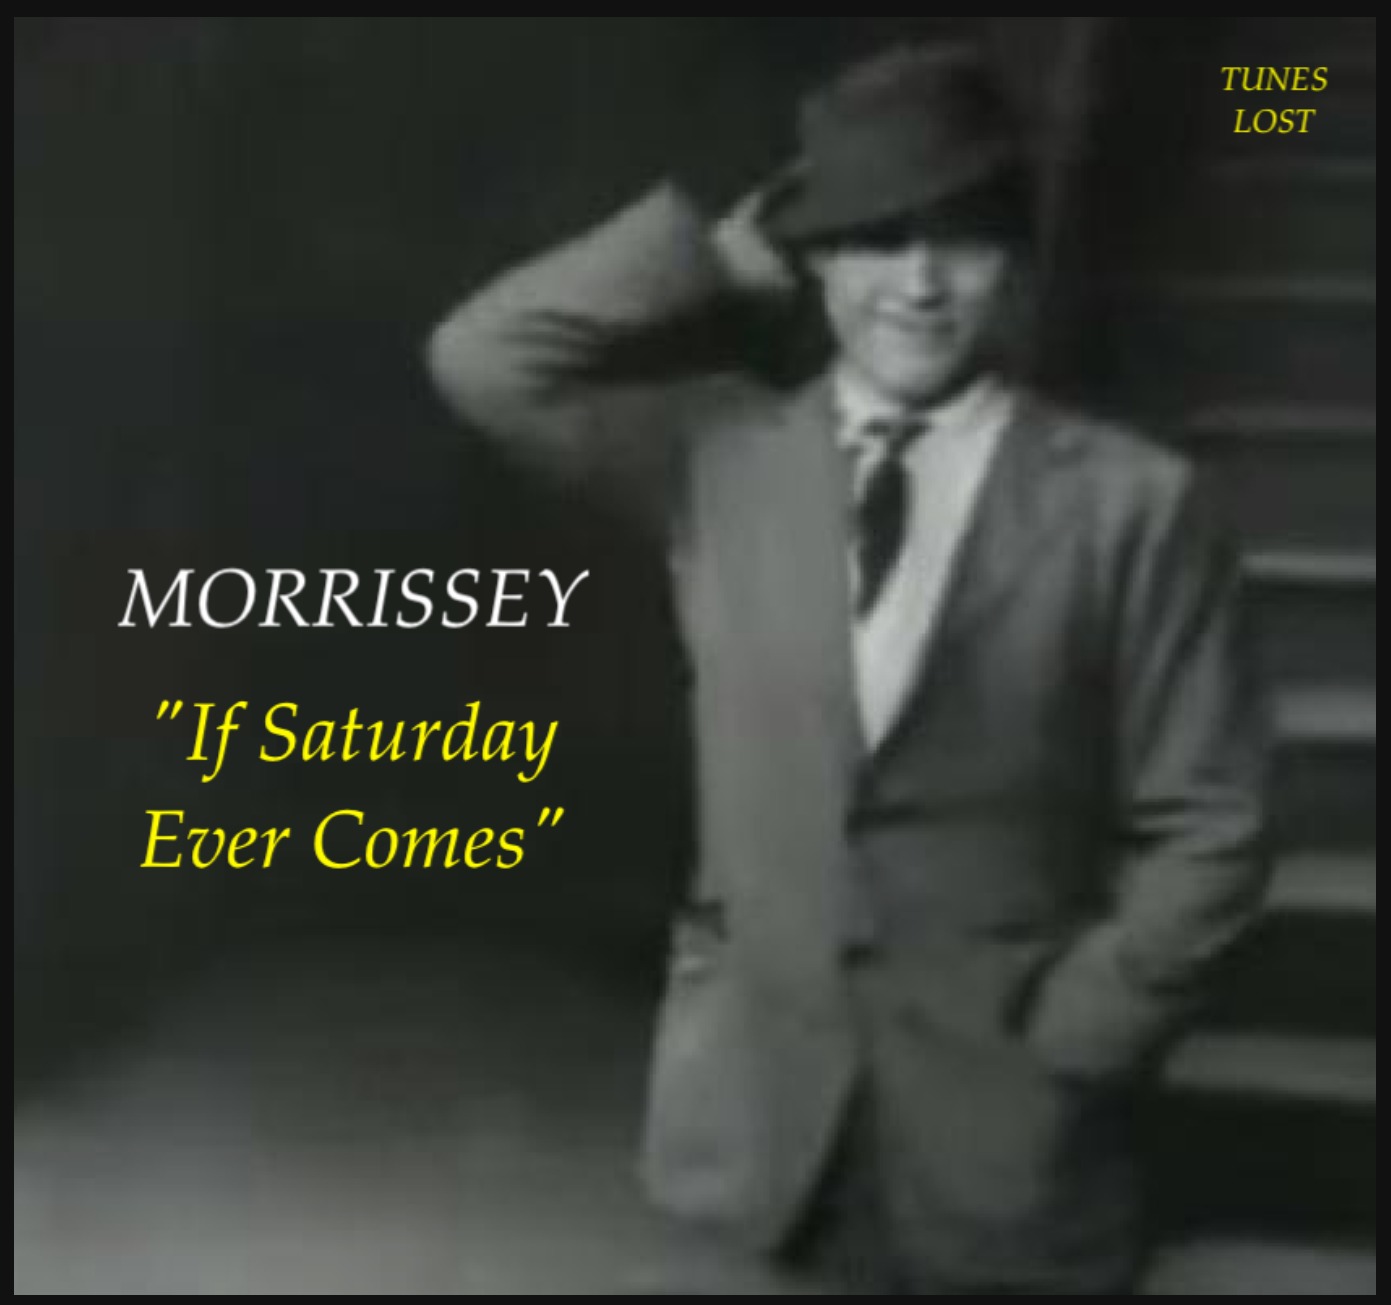 News – Morrissey – Lost demos